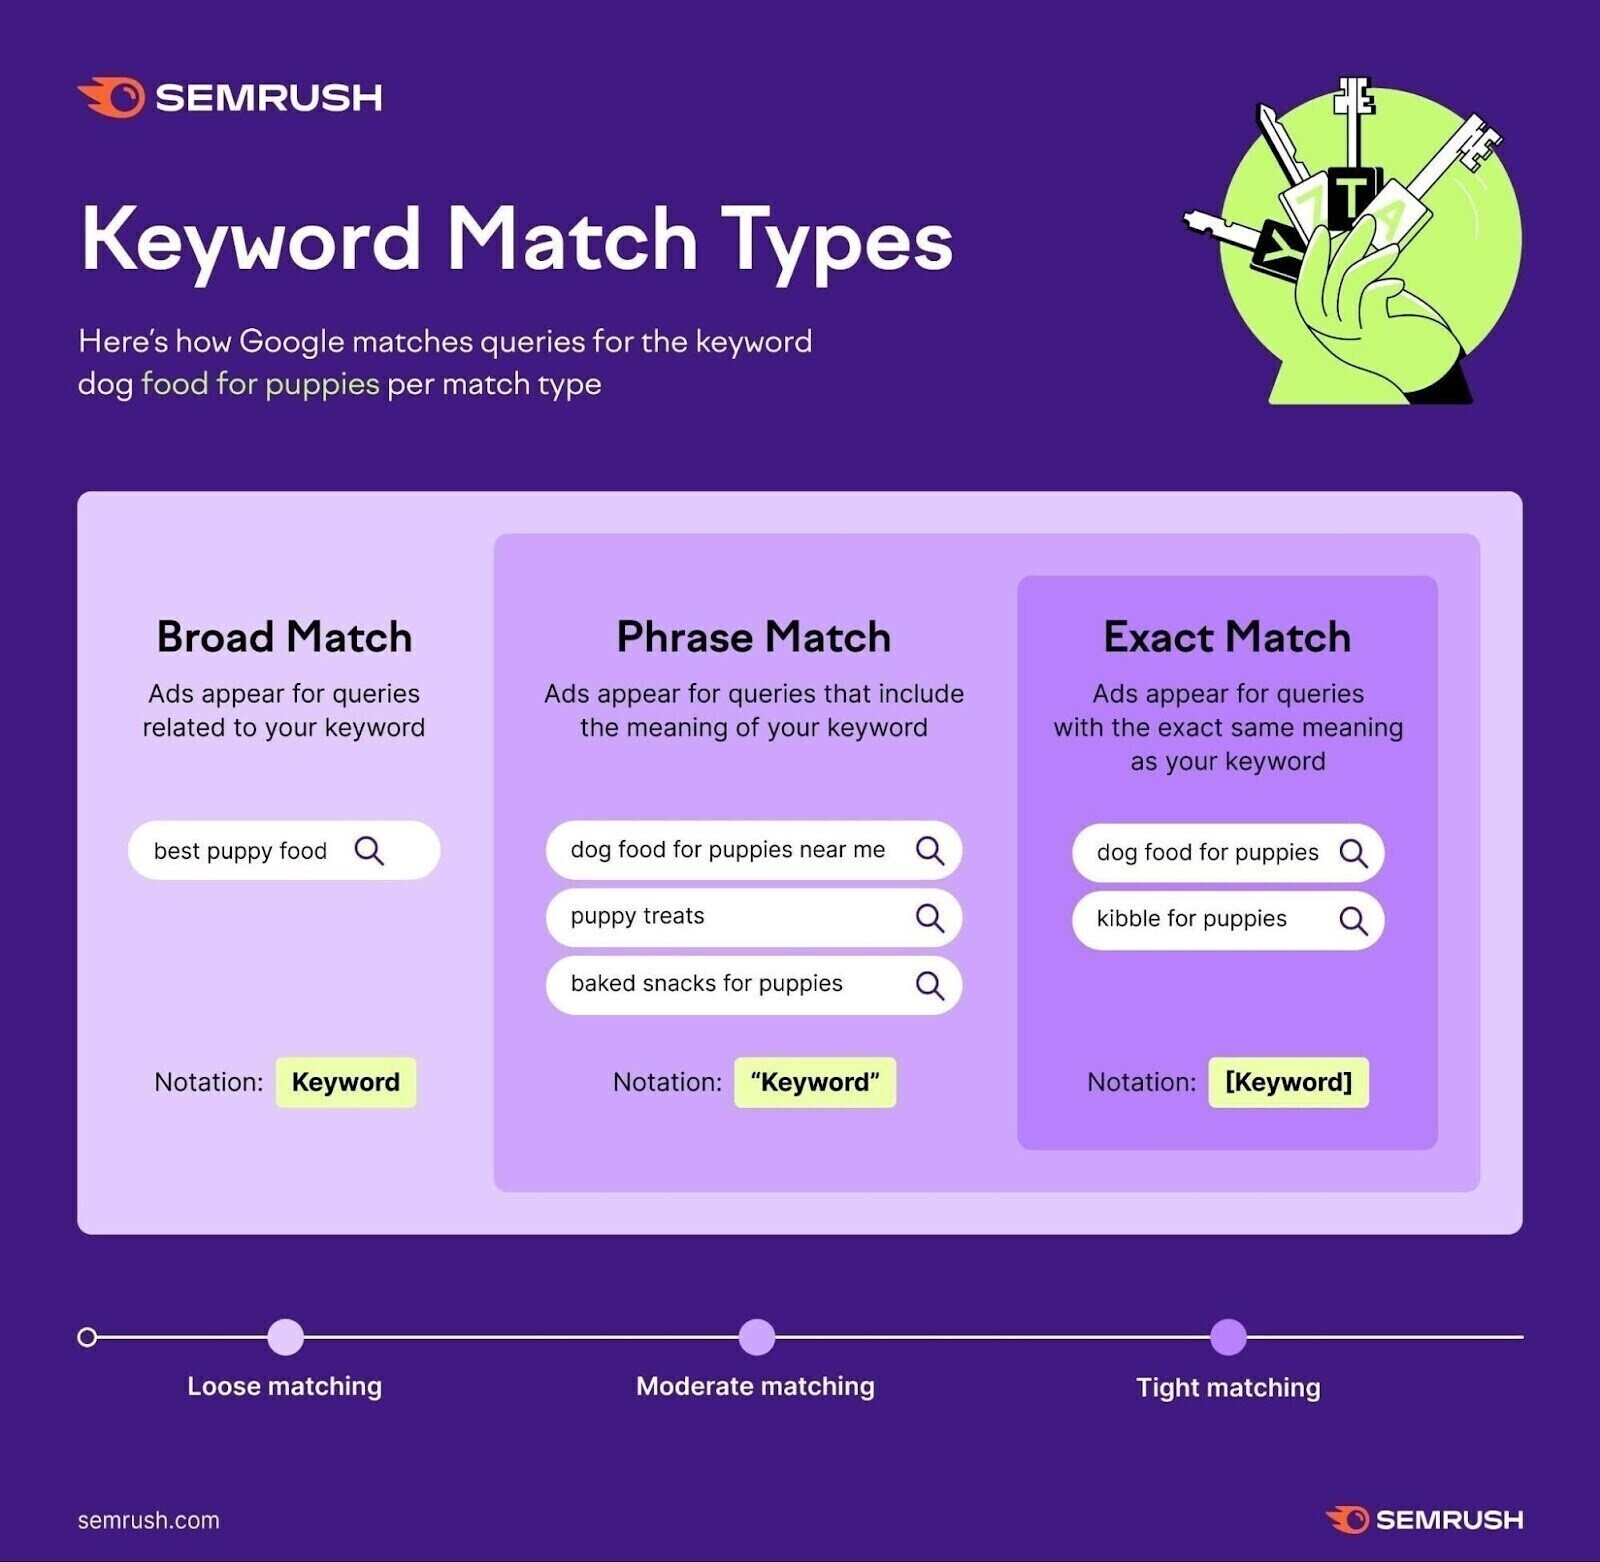 An infographic by Semrush explaining keyword match types